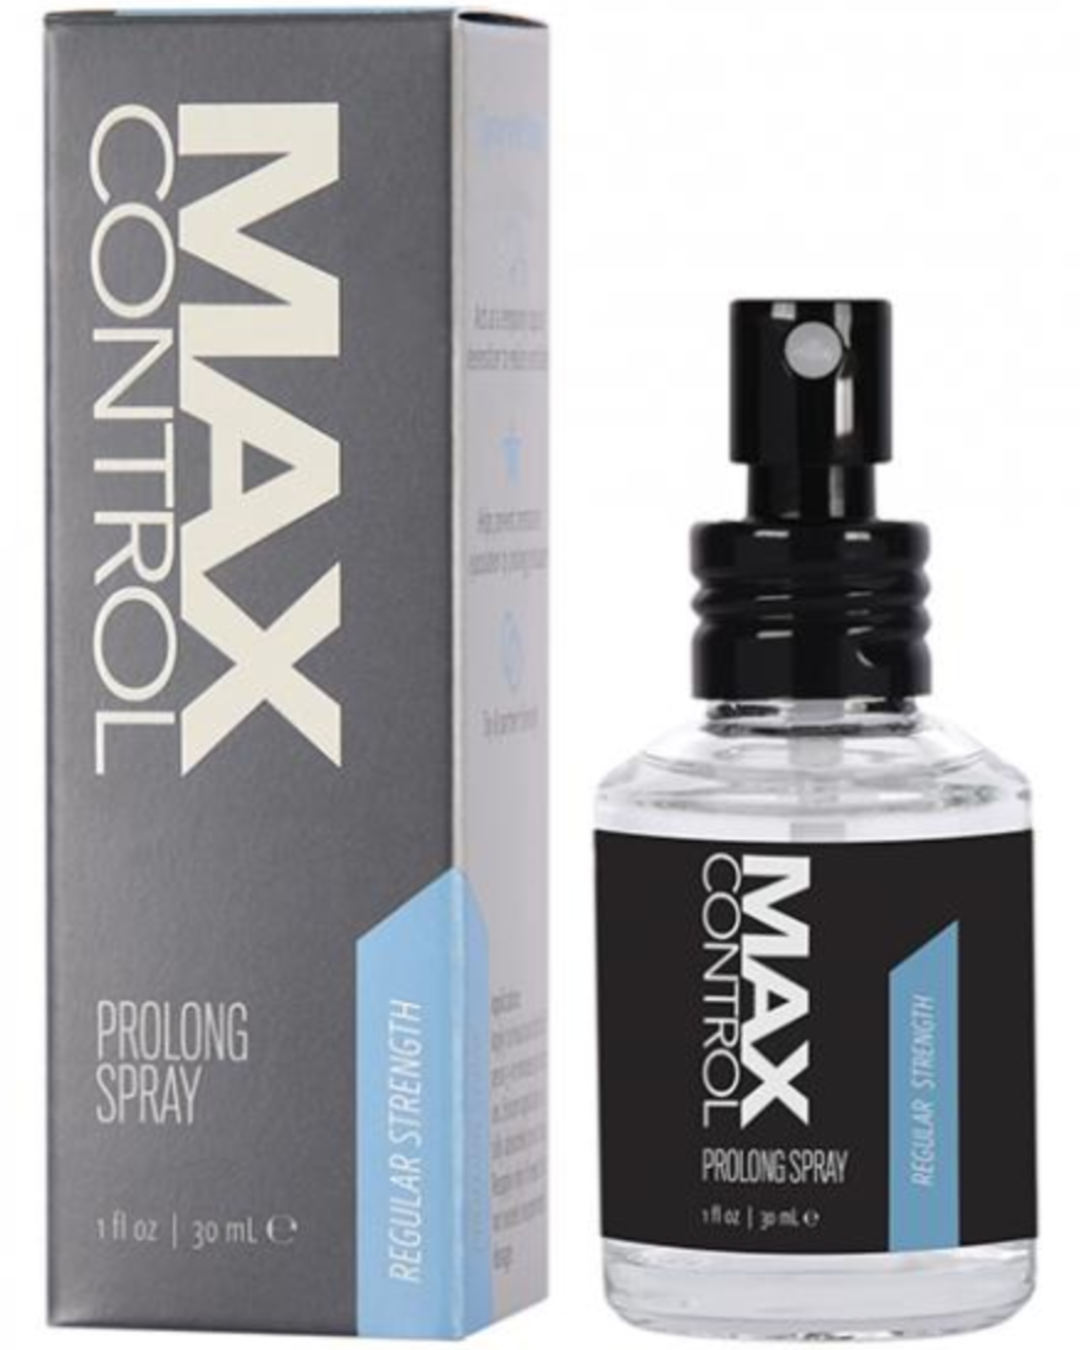 Max Control Prolong Spray Regular Strength - 1oz bottle and box 